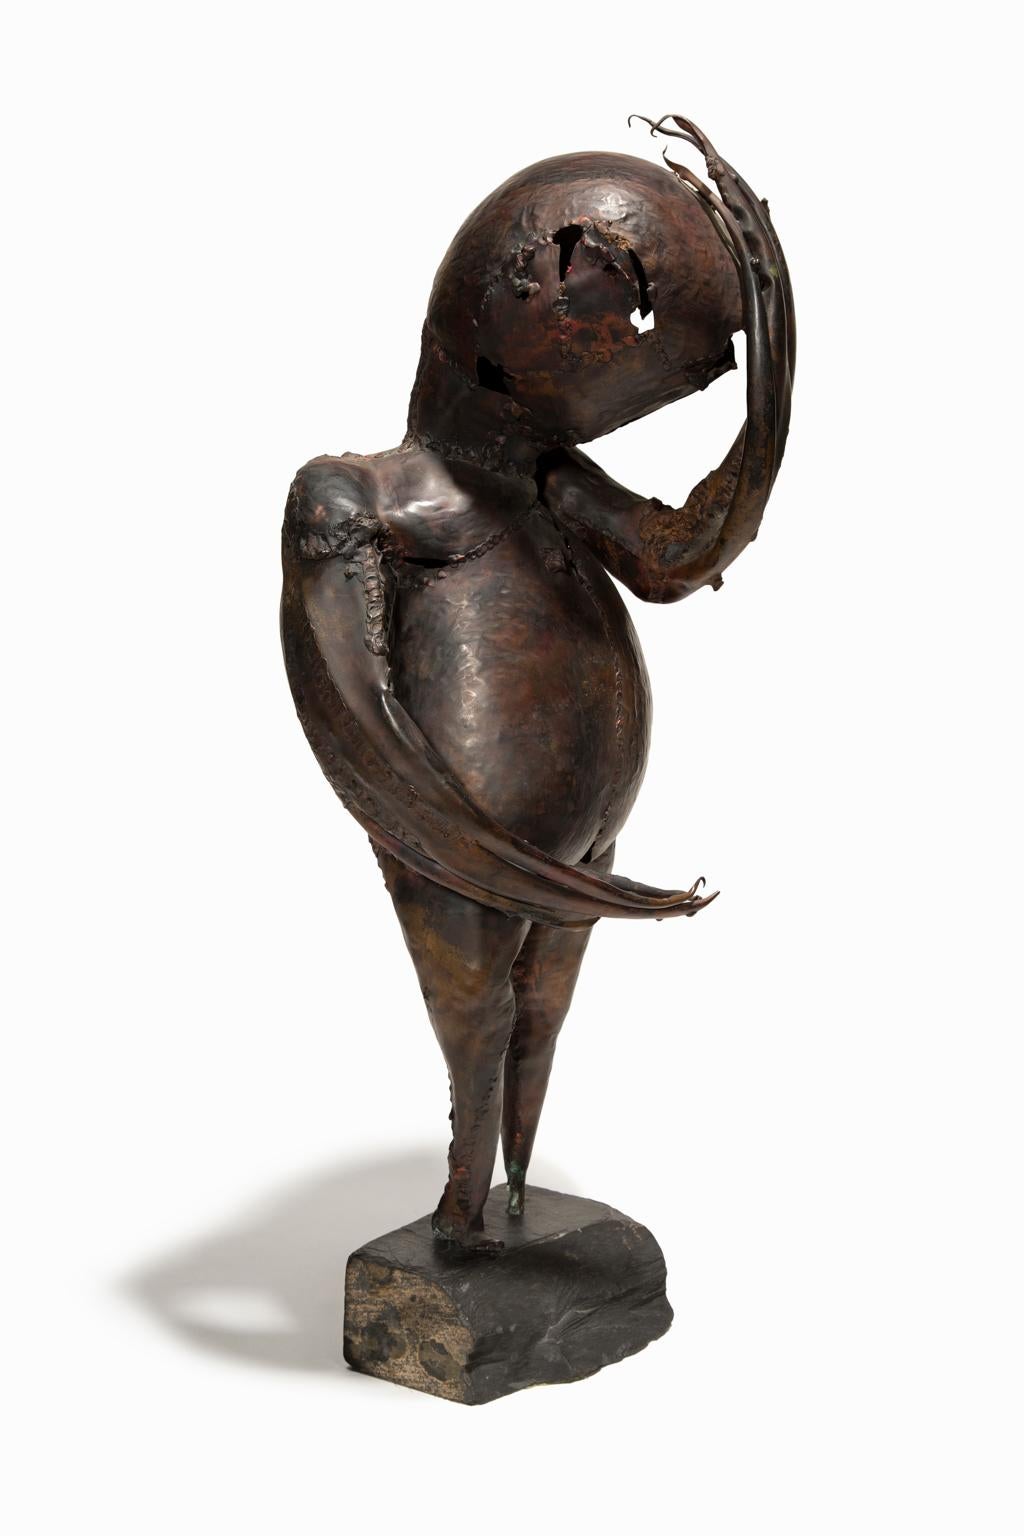  Reinhoud dHaese Sculpture Mythical Figure Copper & Stone